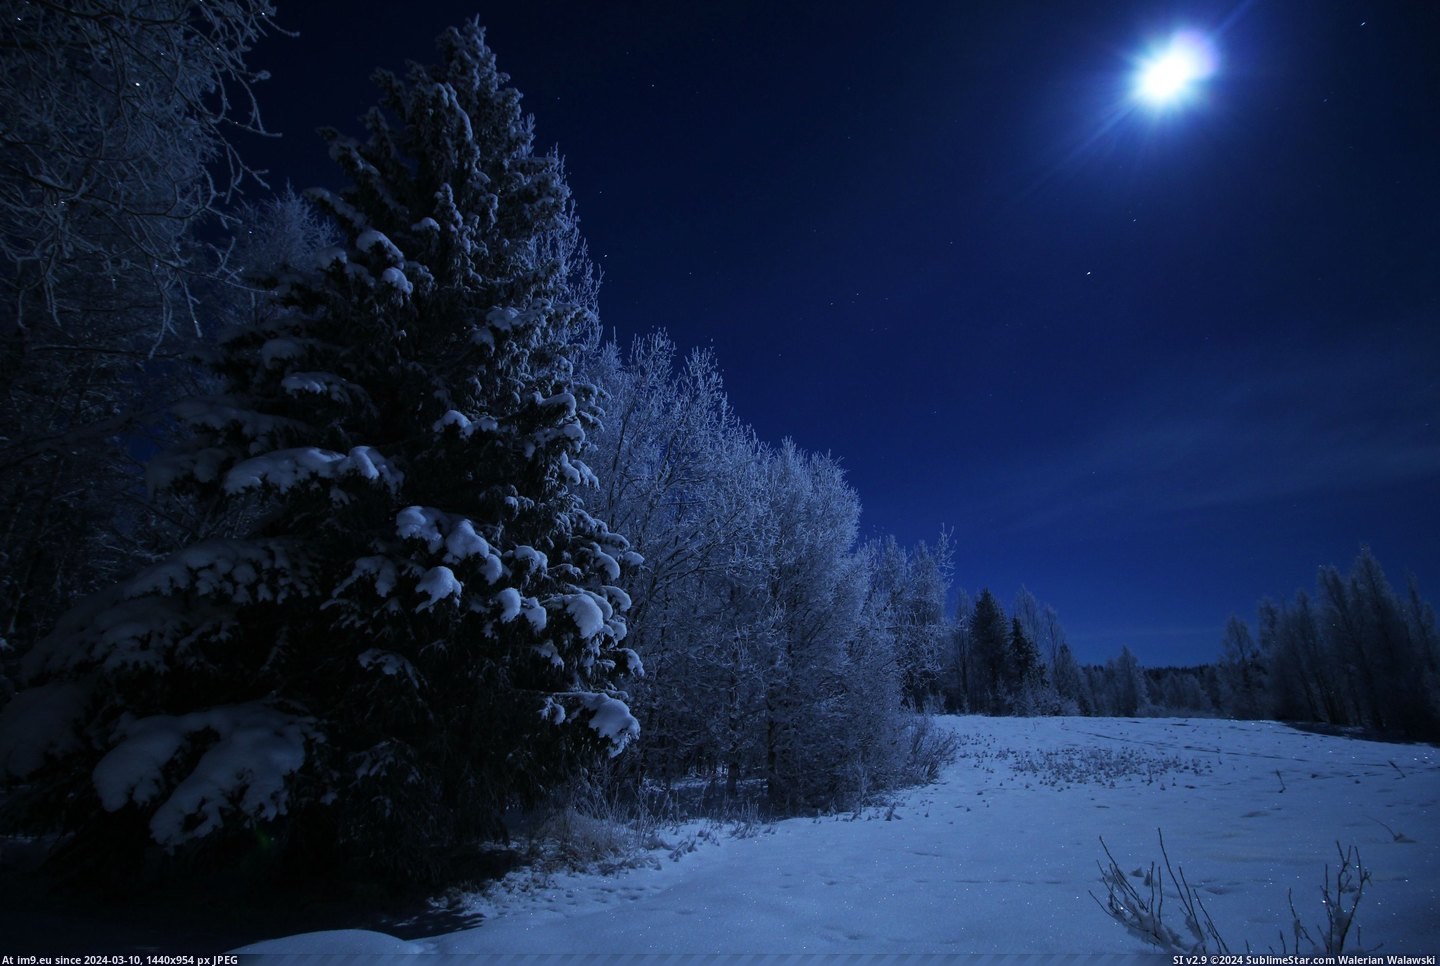 #Northern #Backyard #Degrees #Sweden #Midnight [Pics] -24 degrees celcius, around midnight, northern sweden. View from my backyard. Pic. (Изображение из альбом My r/PICS favs))